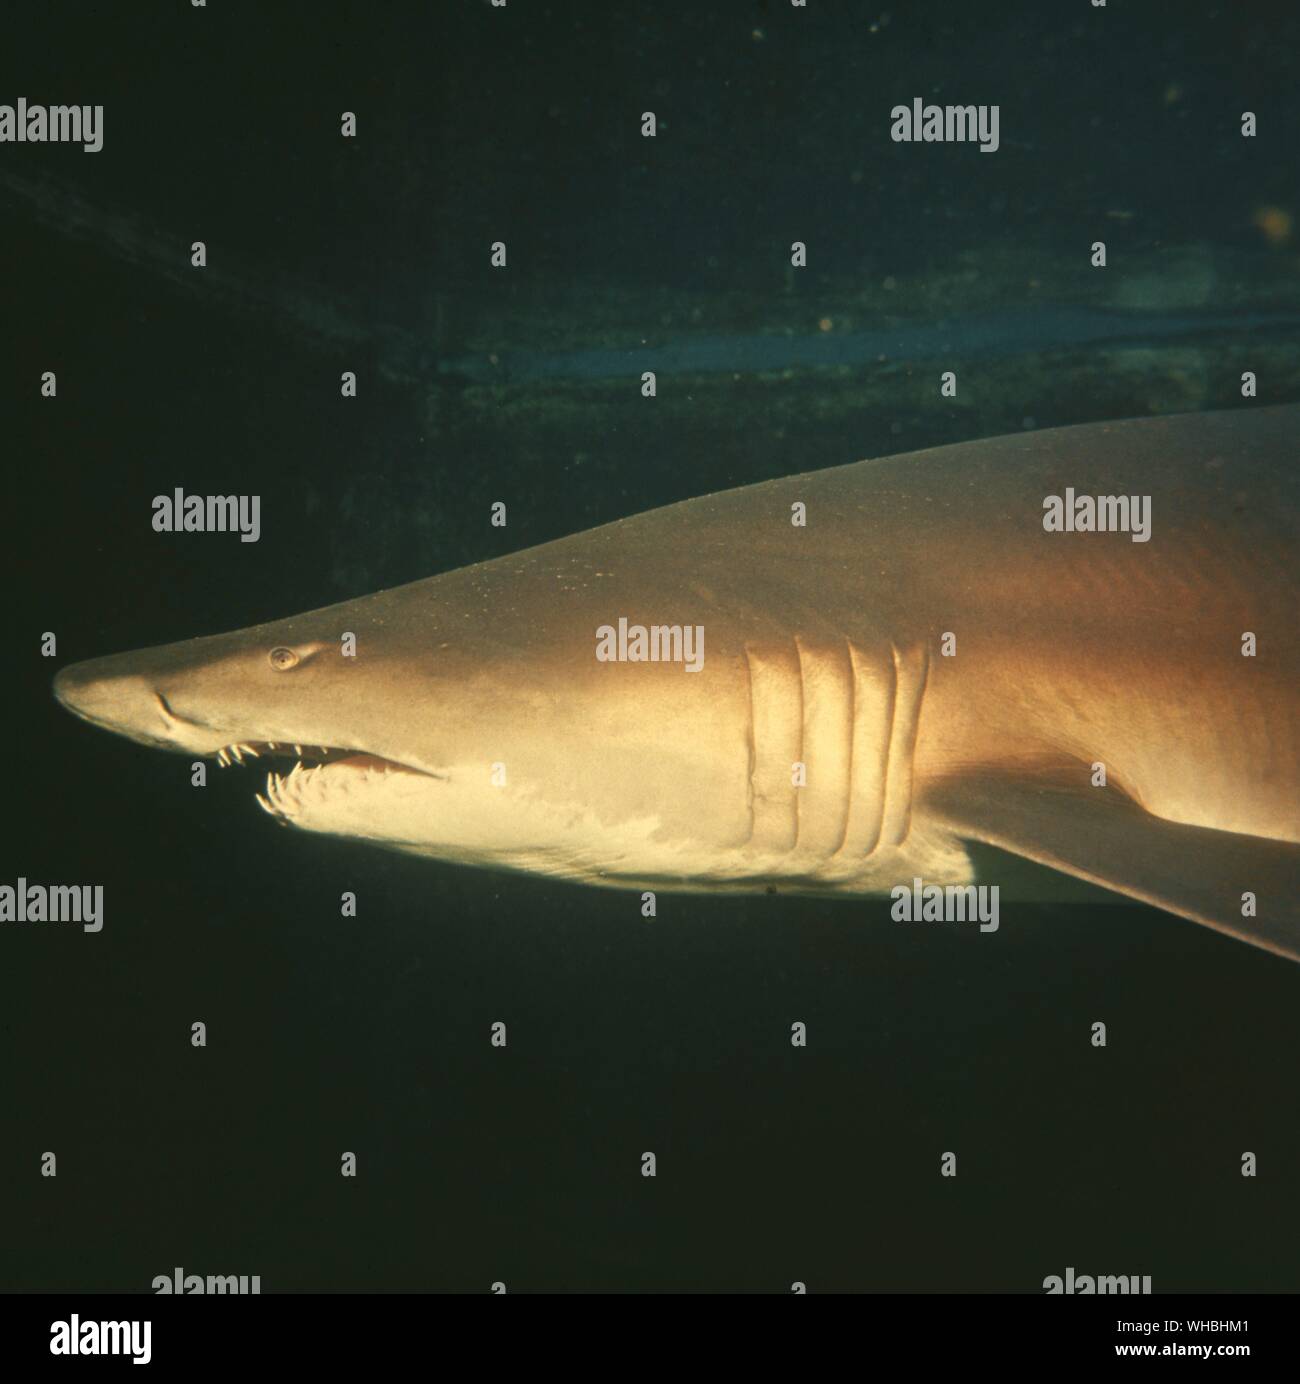 Graynurse shark : maneater 9 ft lunga circa 3 metri , la Grande Barriera Corallina , Queensland , Australia Foto Stock